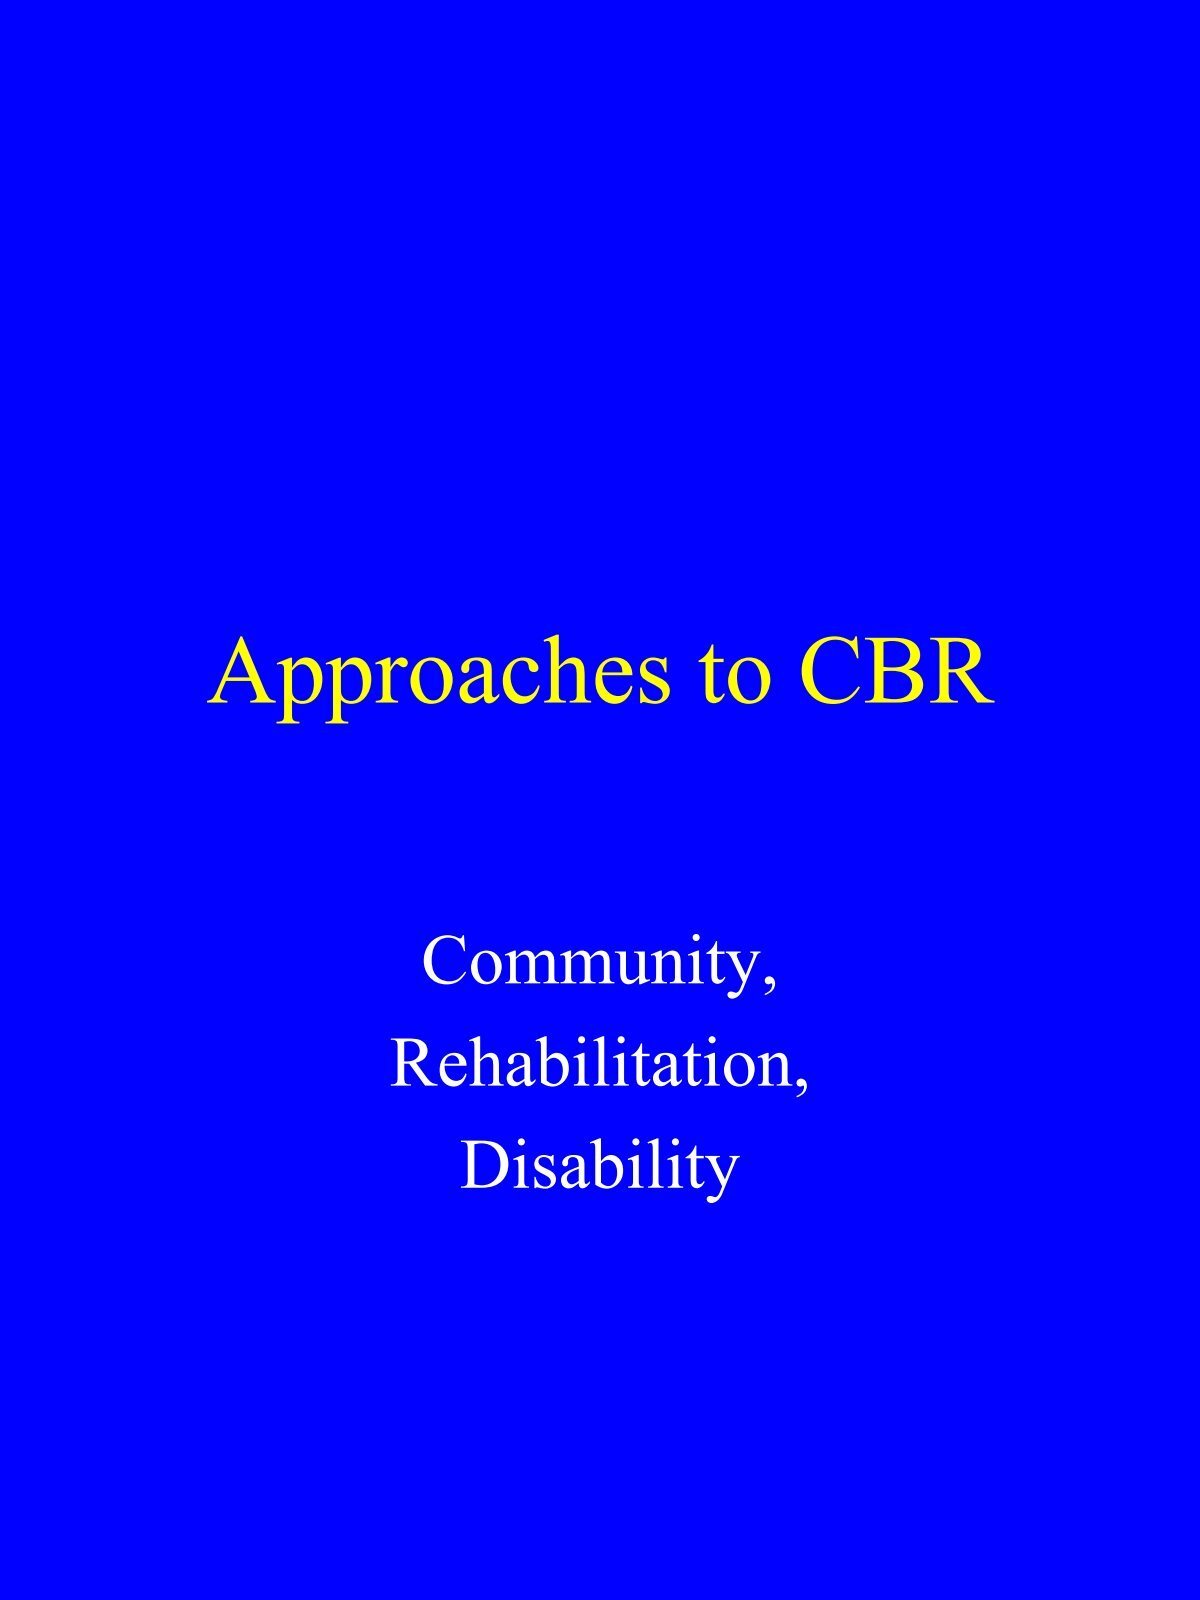 Approaches To Community Based Rehabilitation Presentation